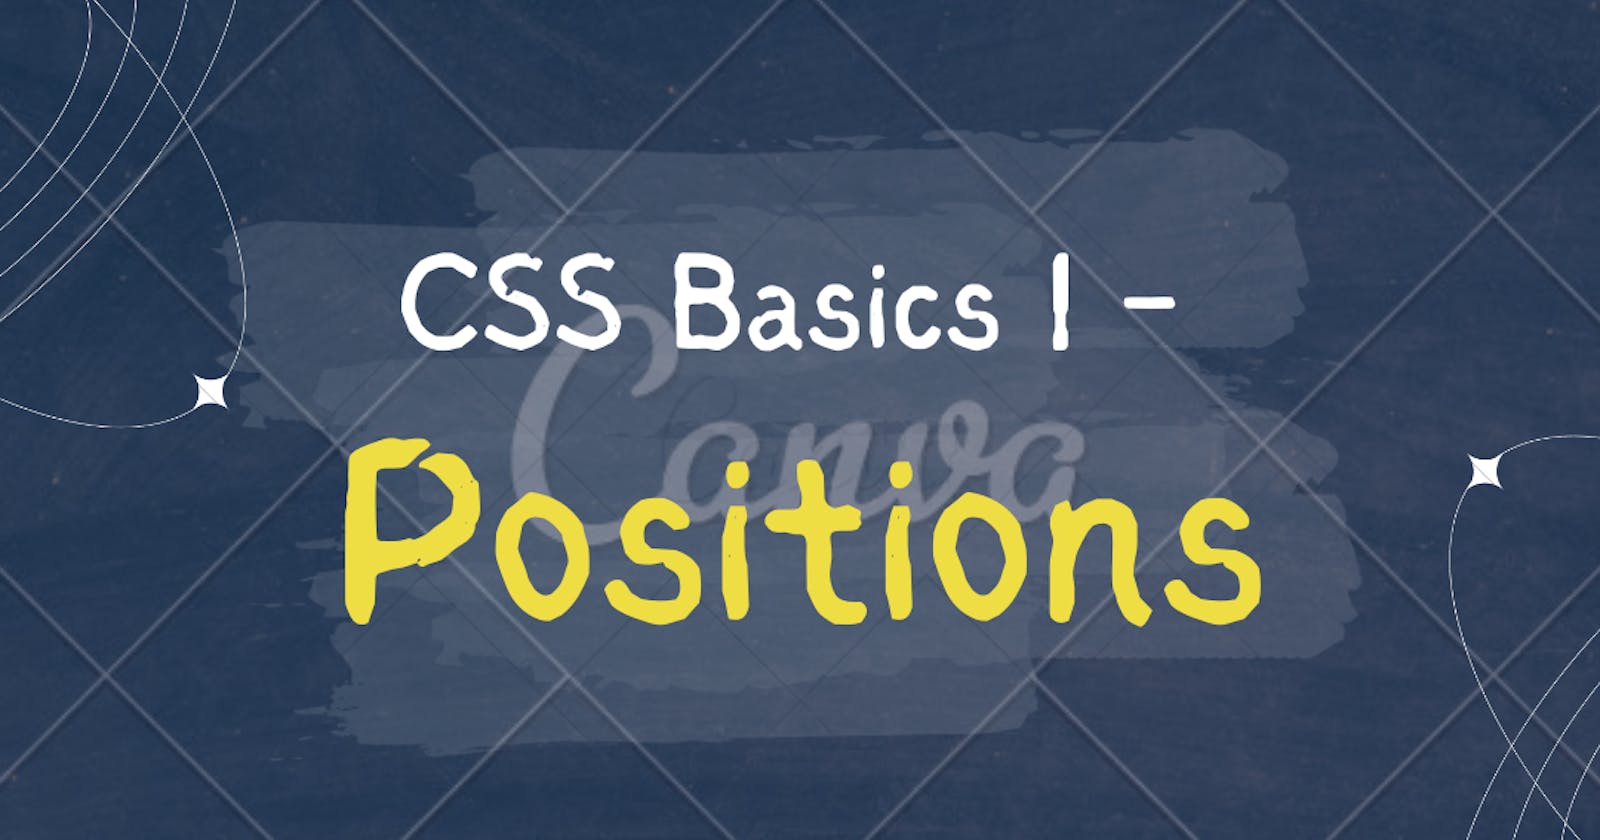 CSS BASICS - Part I: POSITIONS